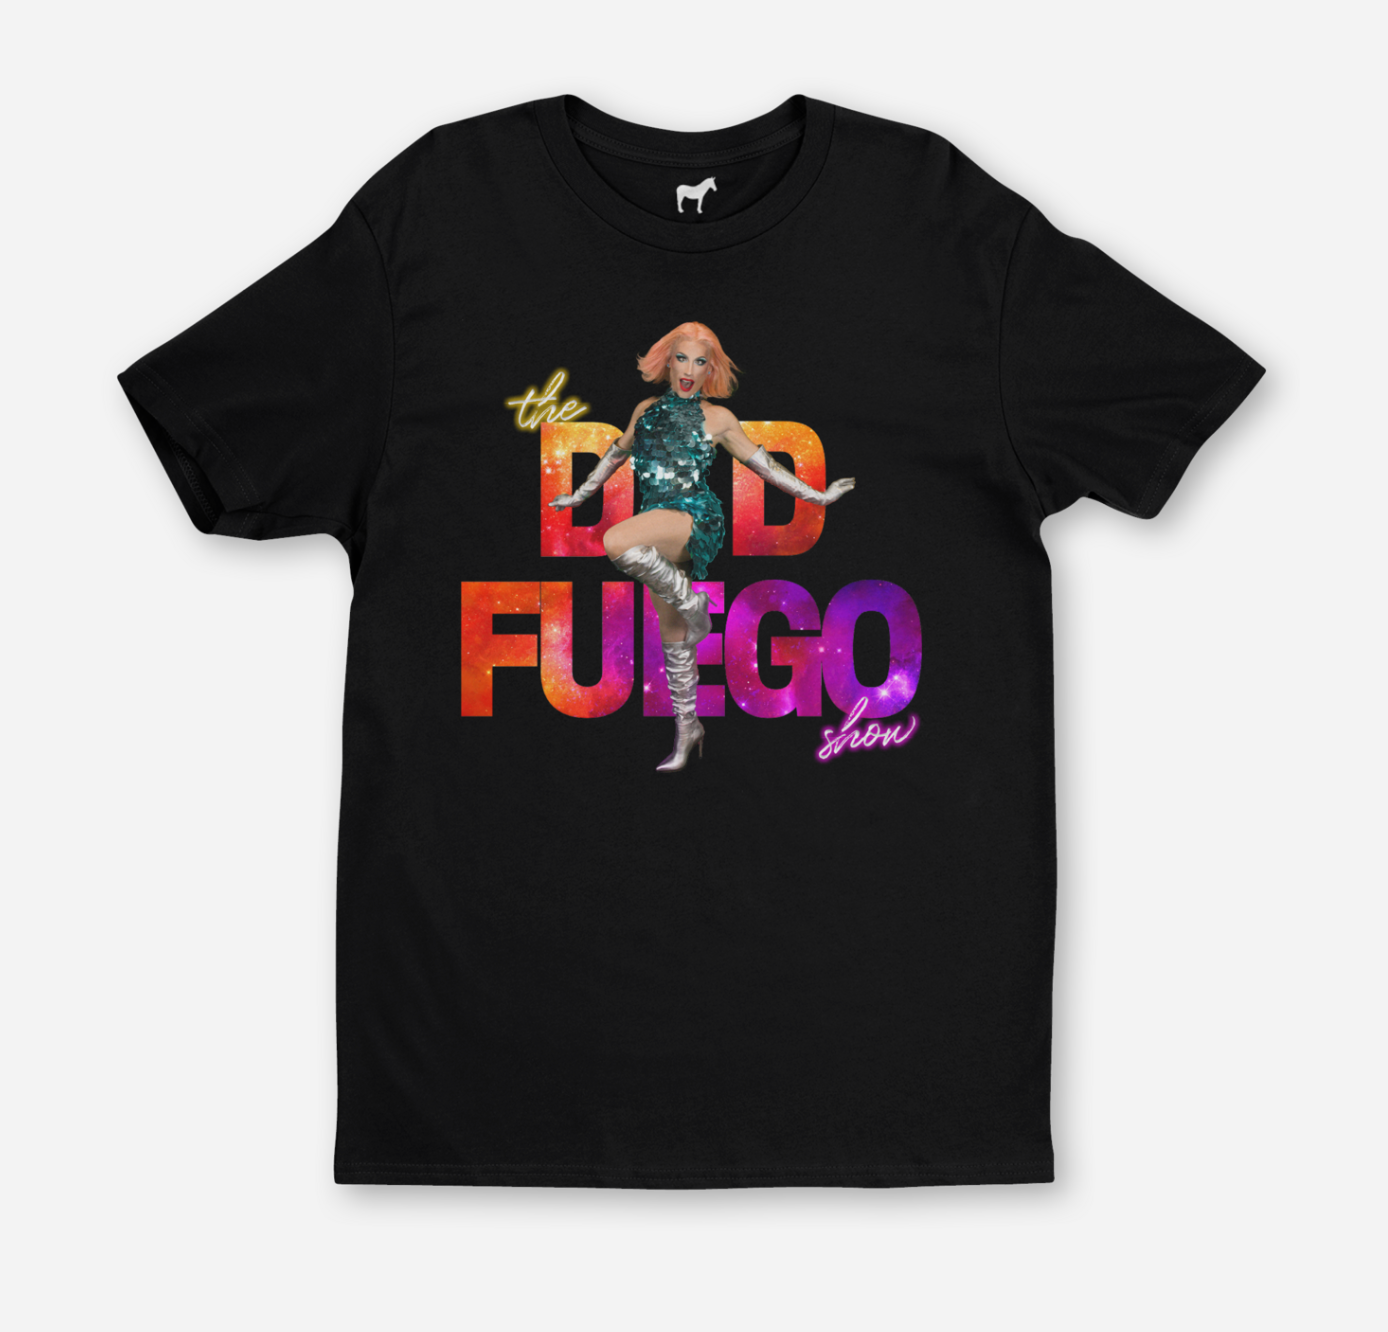 The DD Fuego Show T Shirt